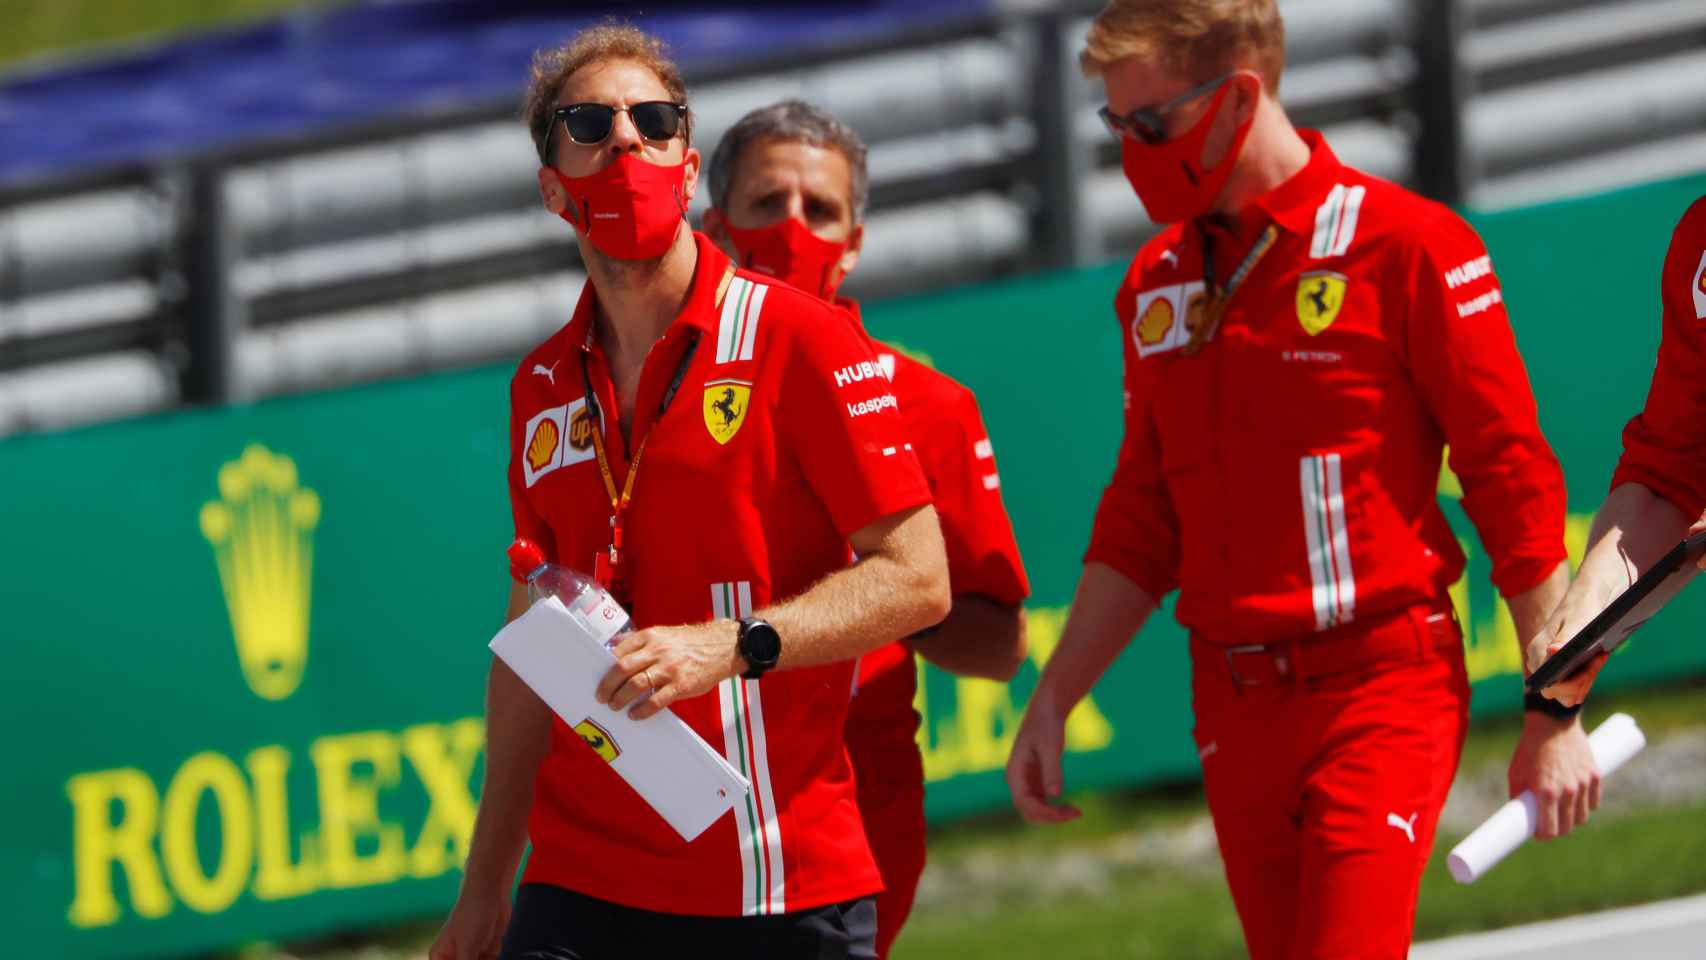 Sebastian Vettel reconociendo el Red Bull Ring de Spielberg, Austria